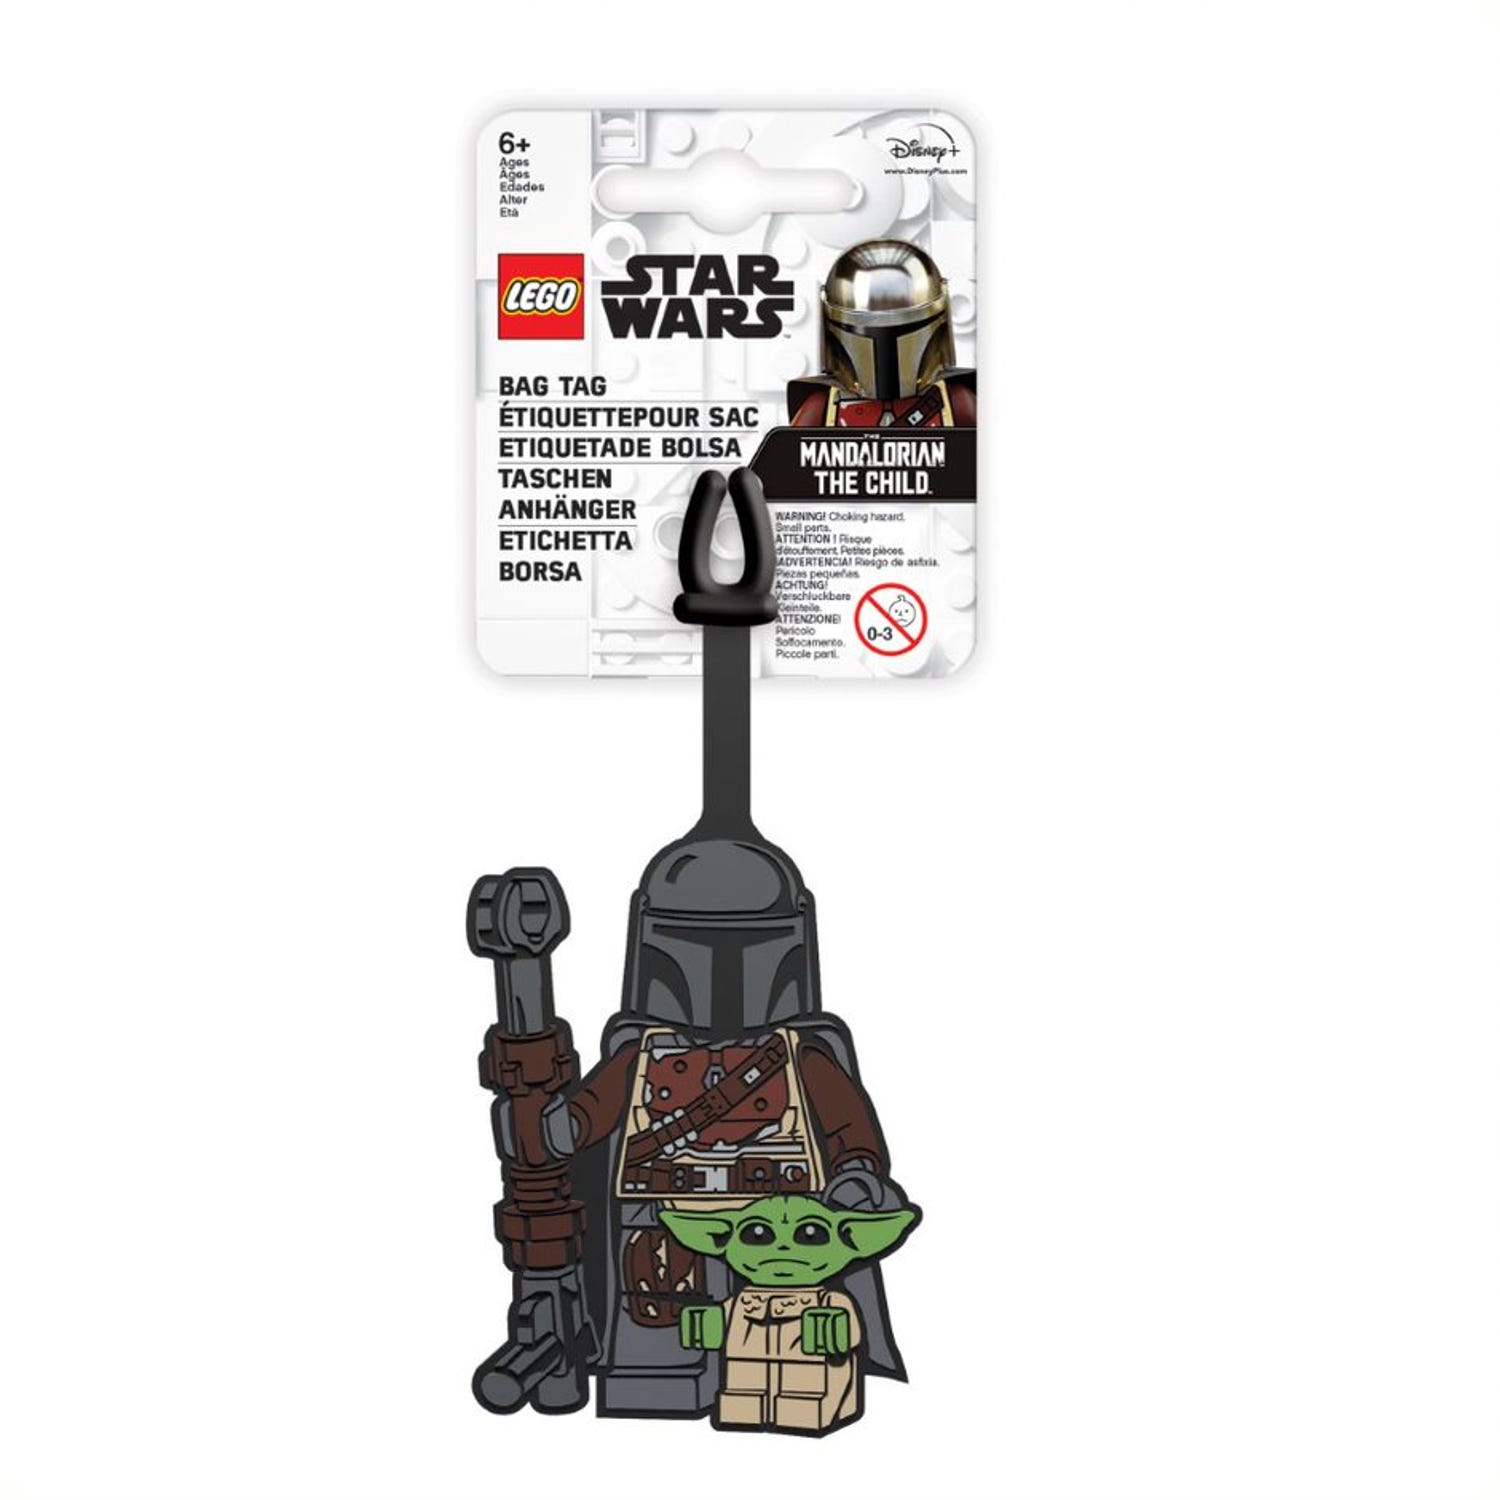 The Mandalorian™ with Grogu™ Bag Tag 5006367 - LEGO